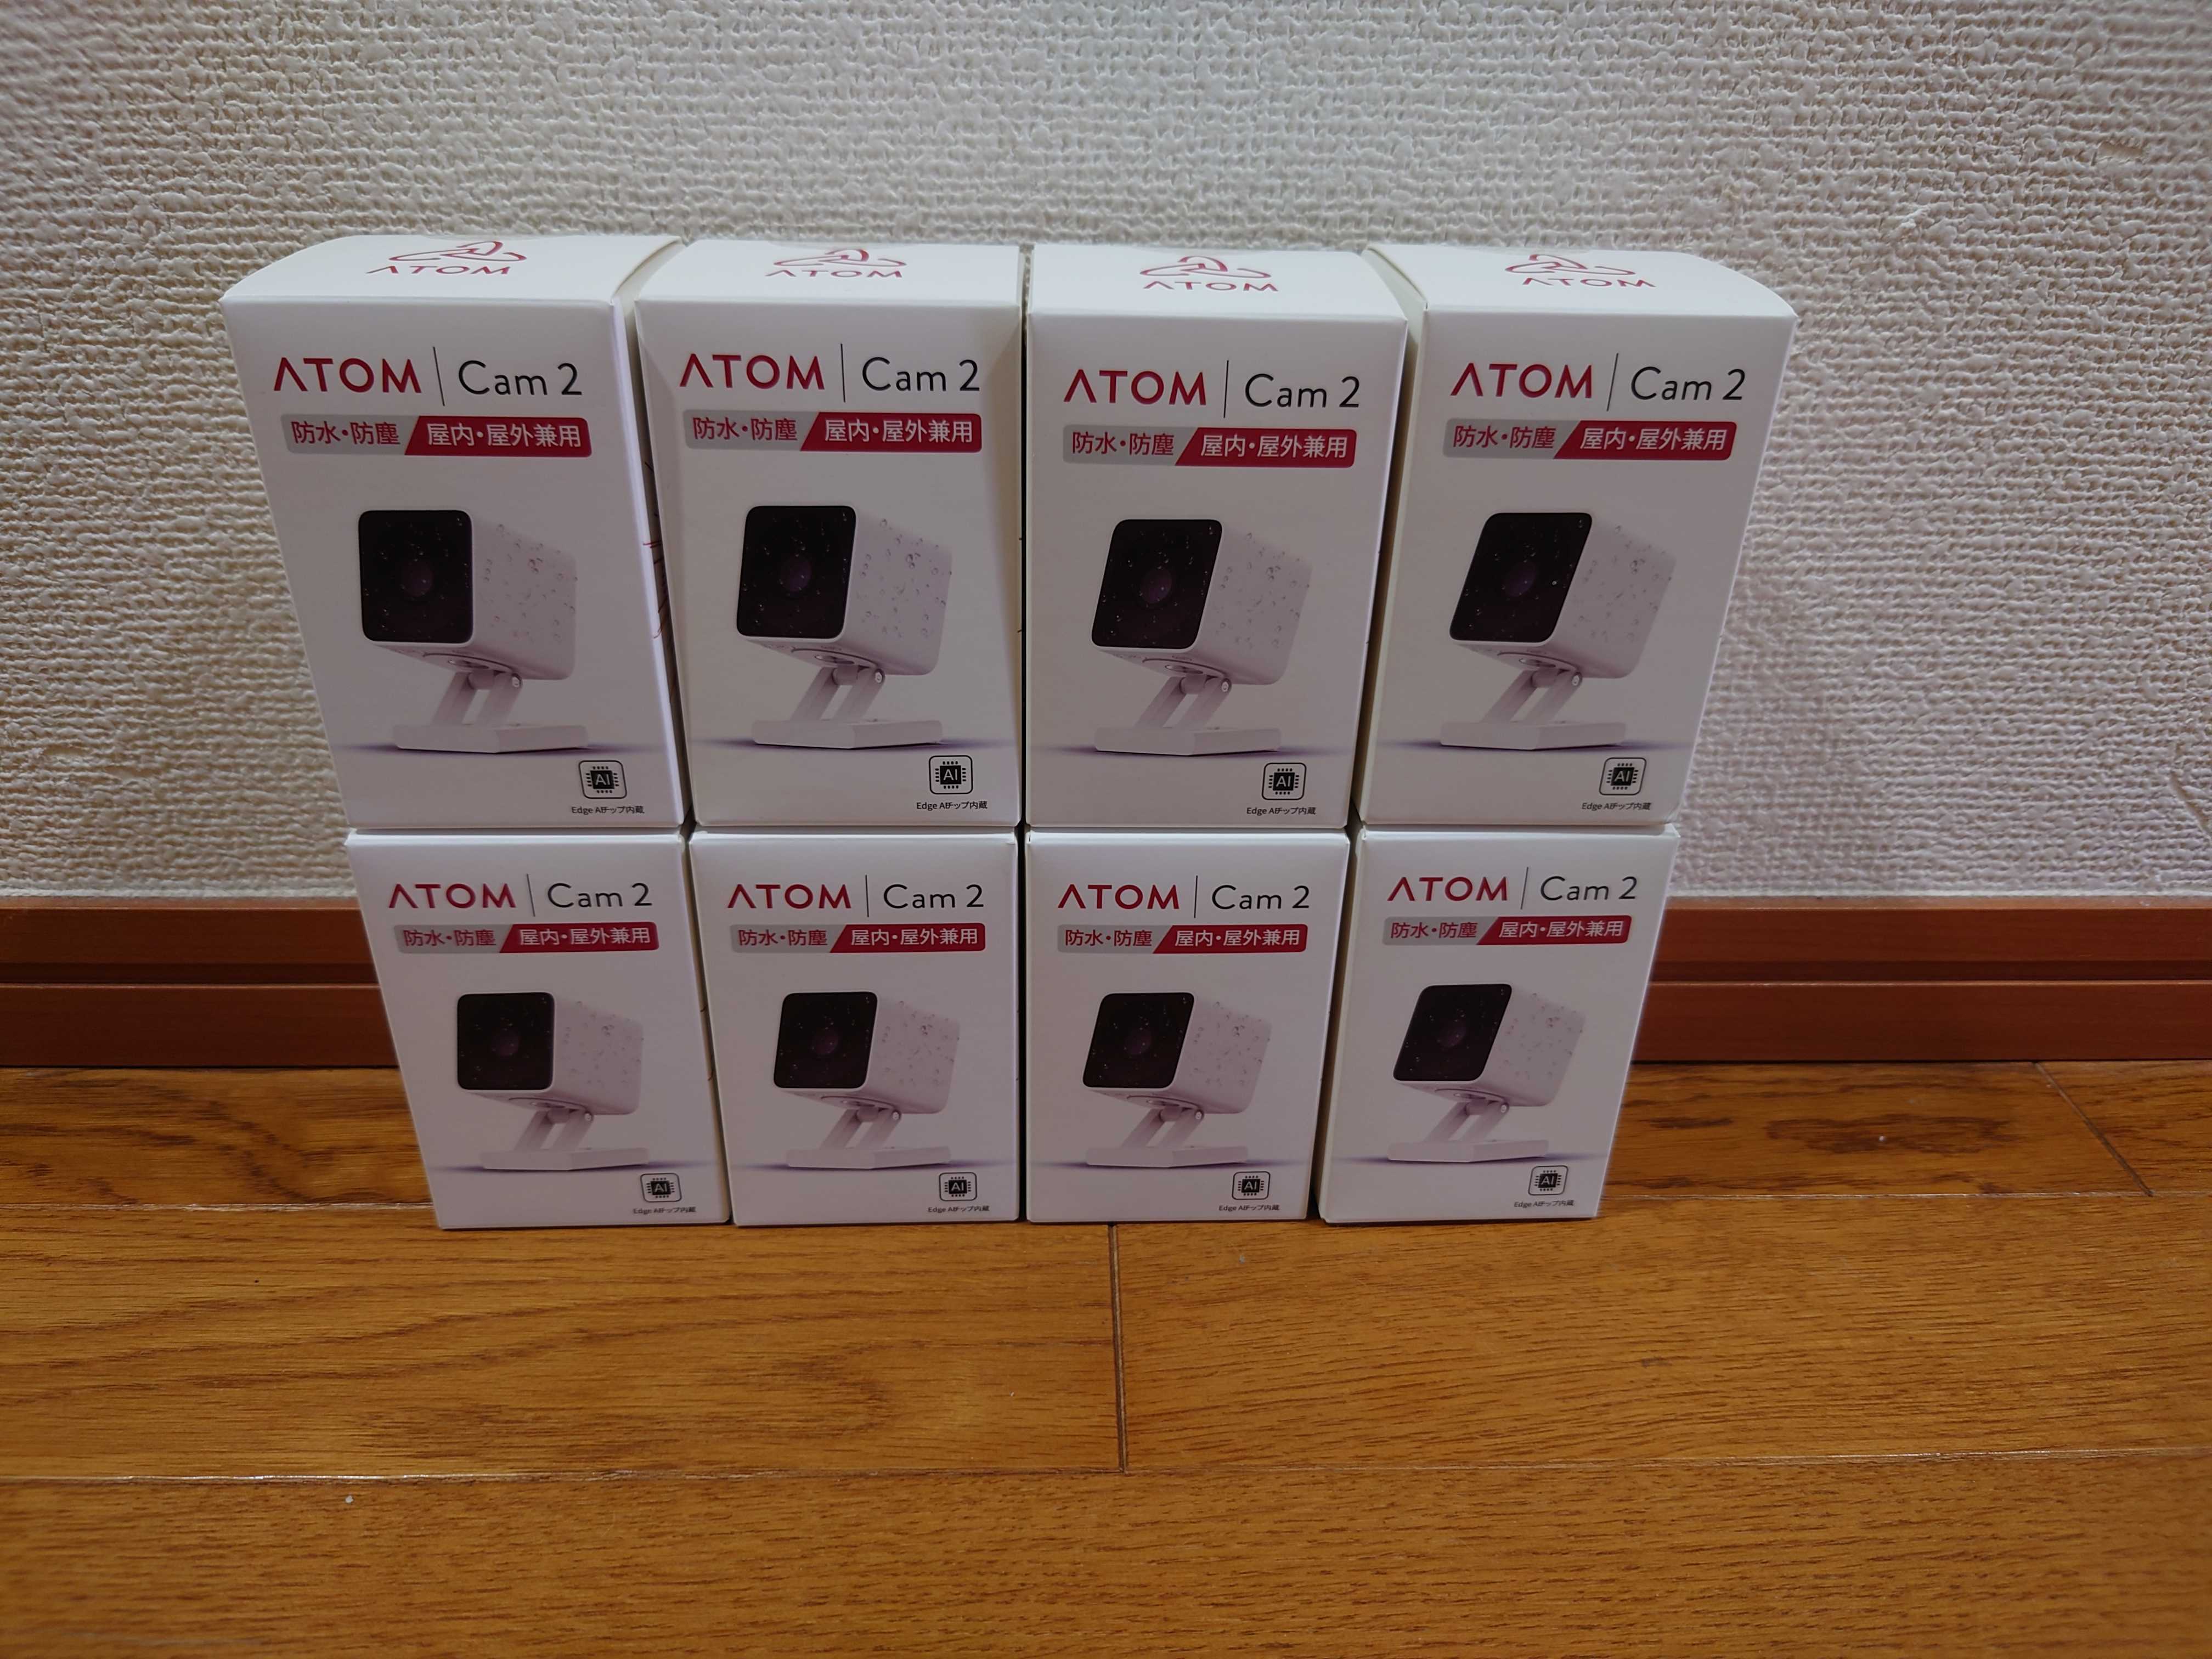 「ATOM Cam 2」の所持台数が16台になる